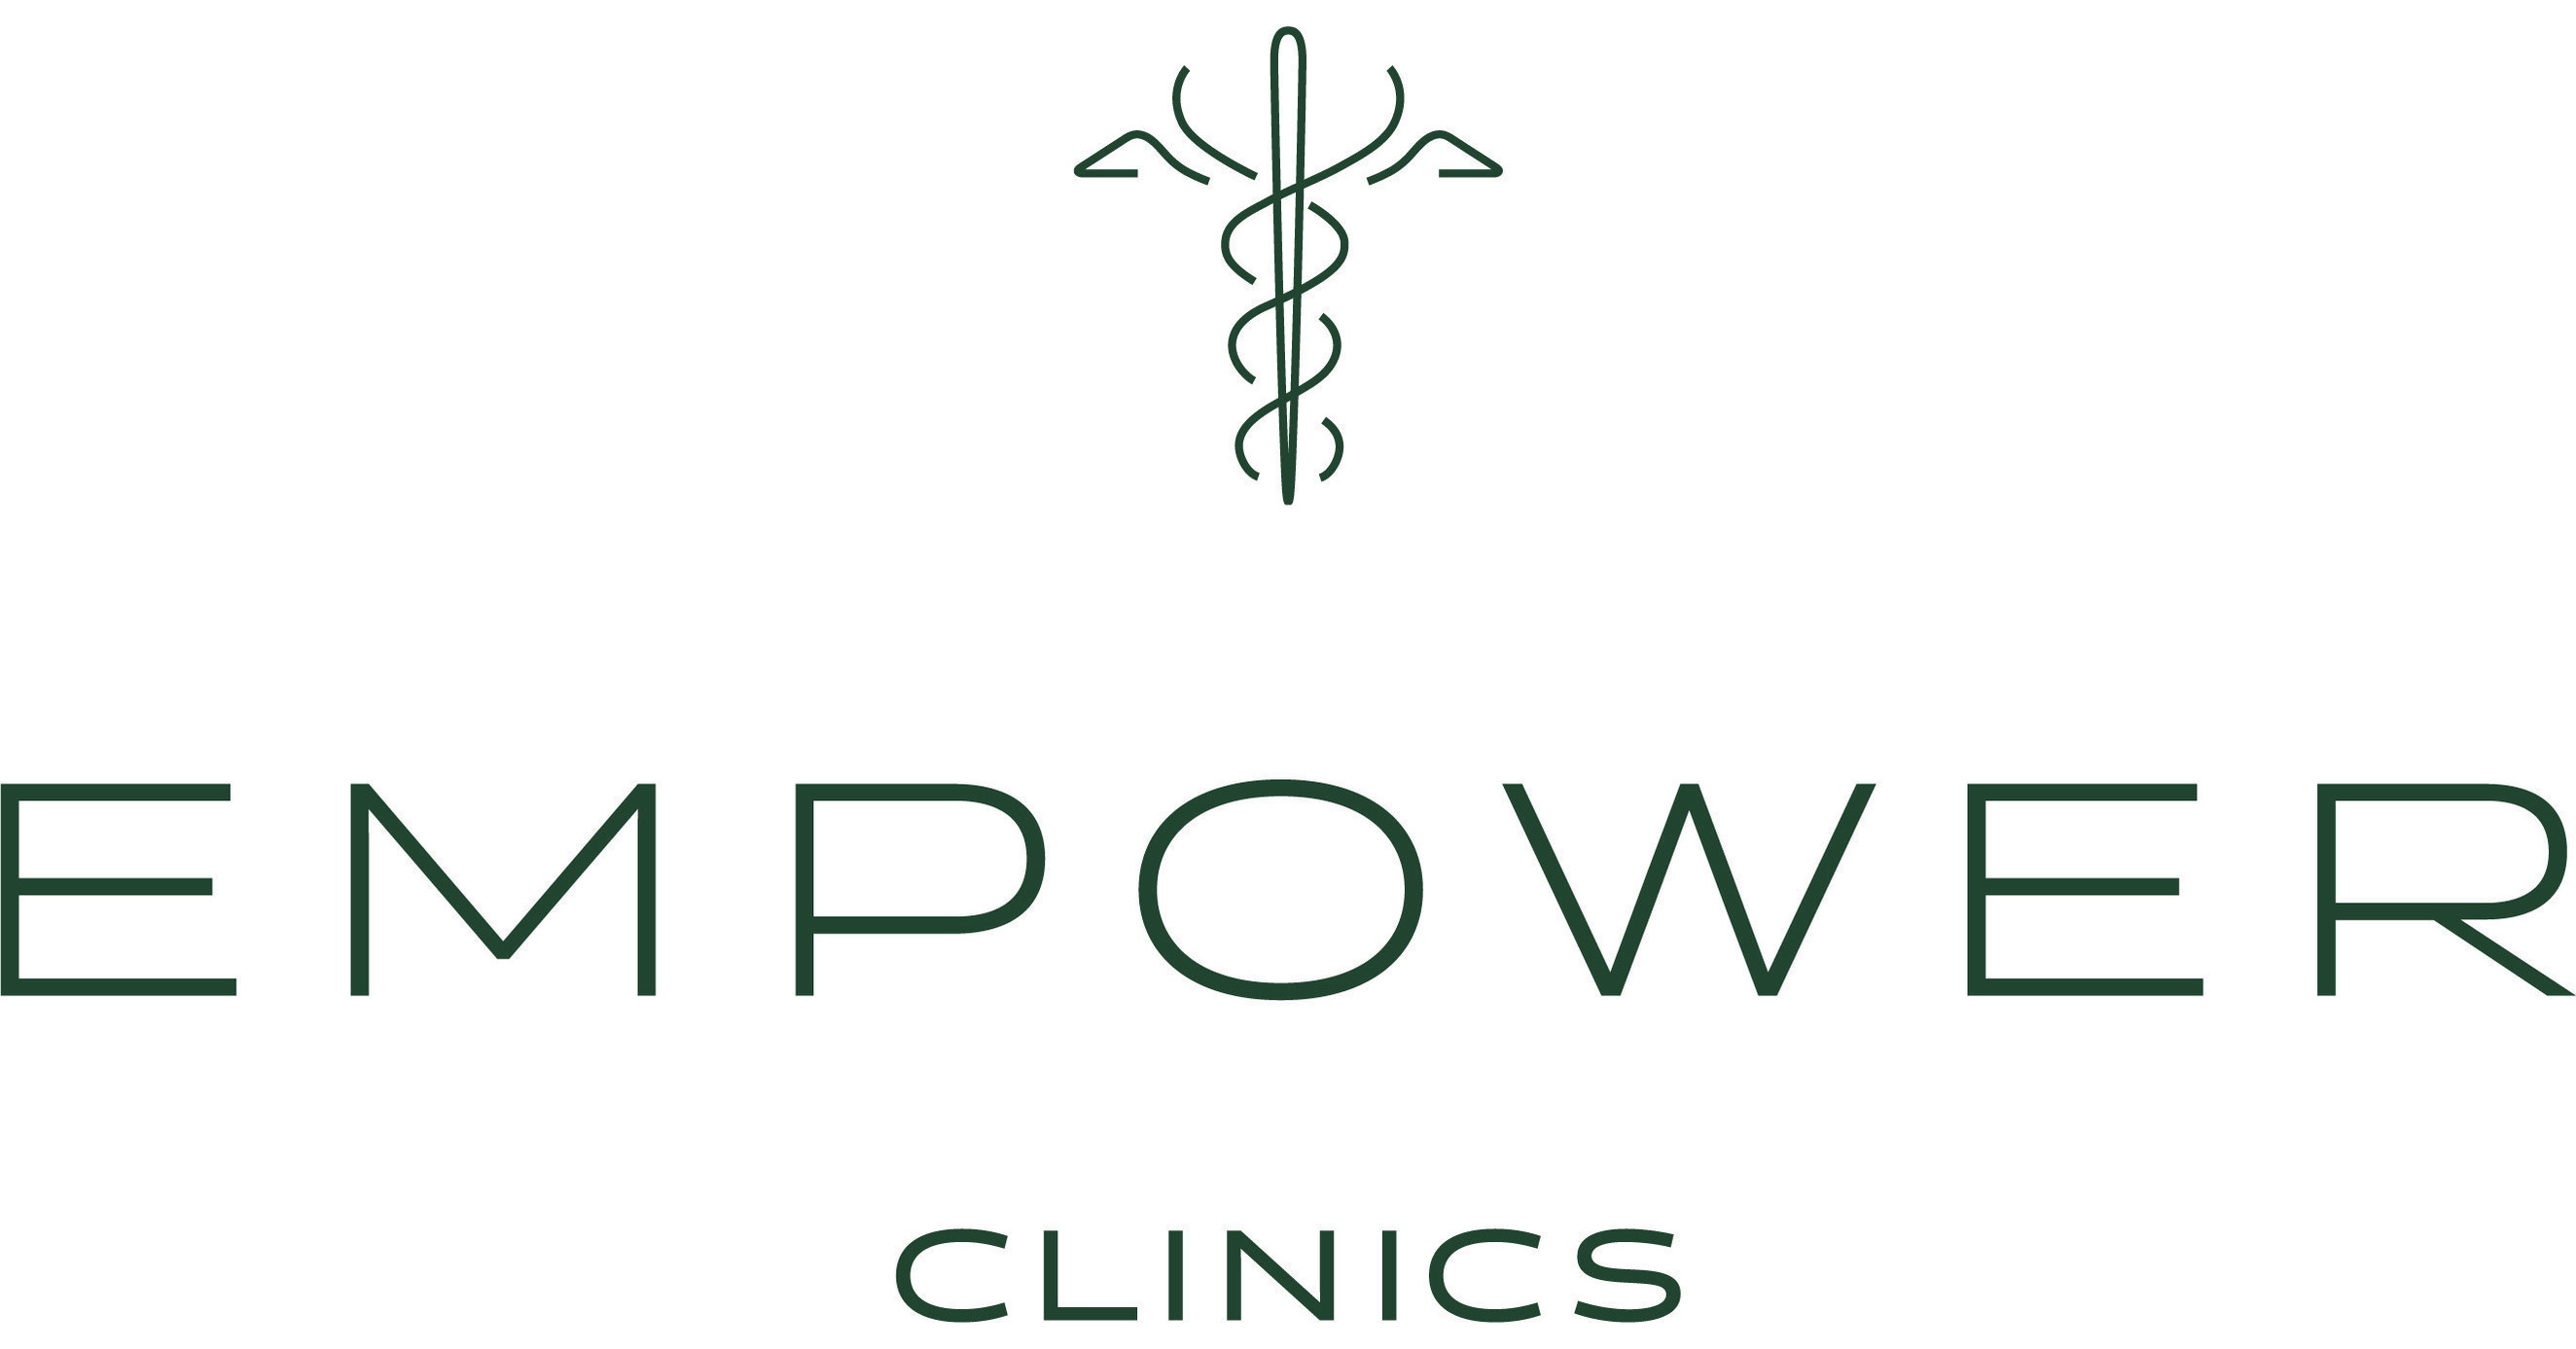 empower clinics